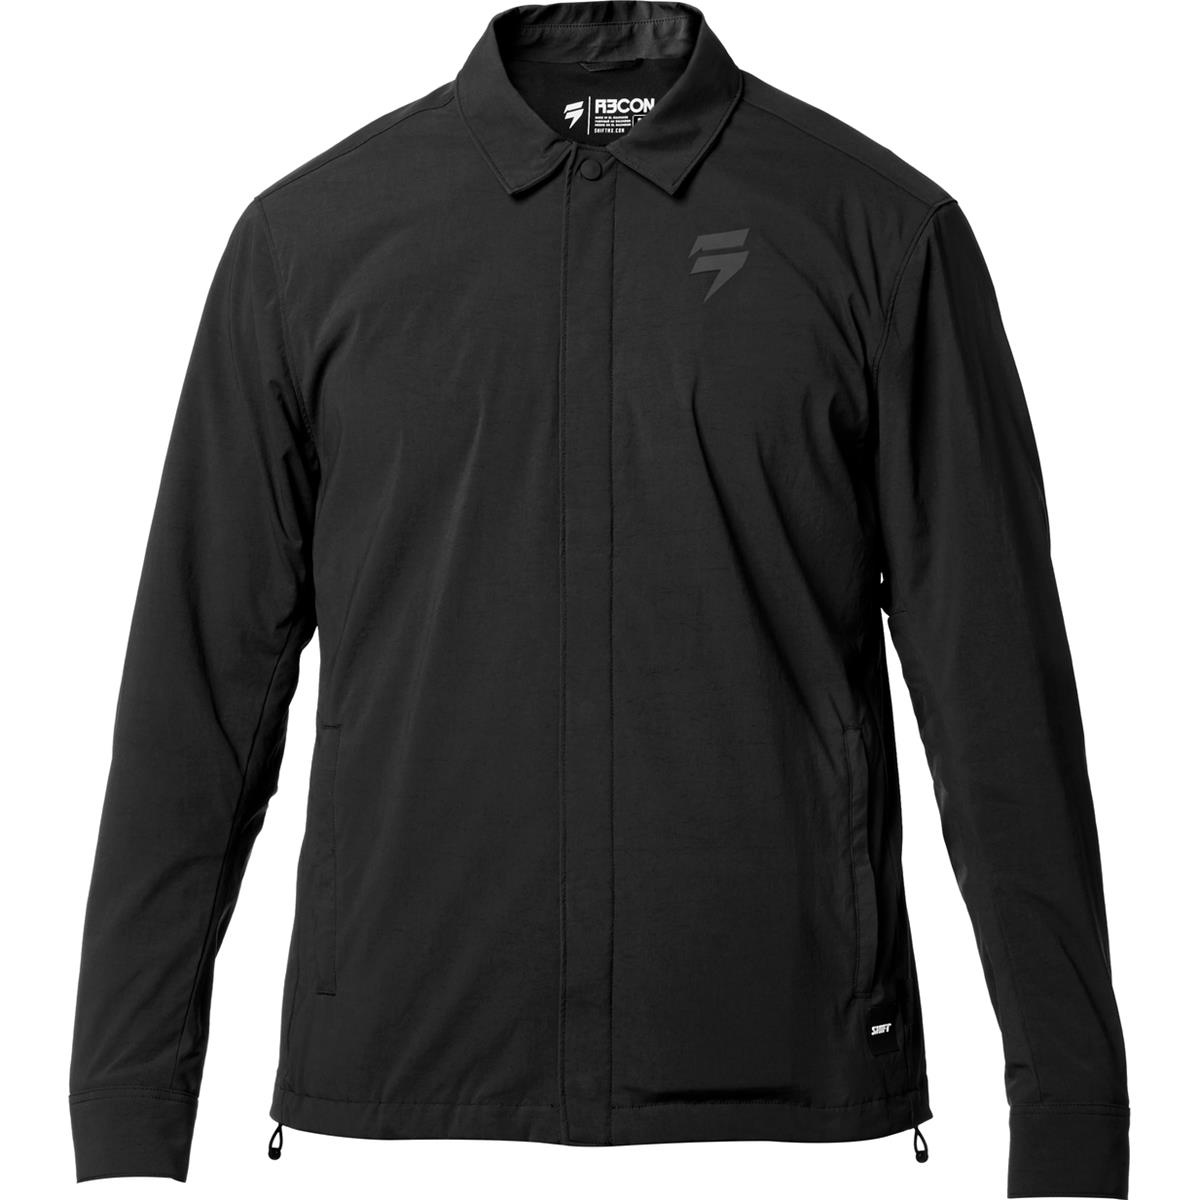 Shift Jacket Recon Coaches Black